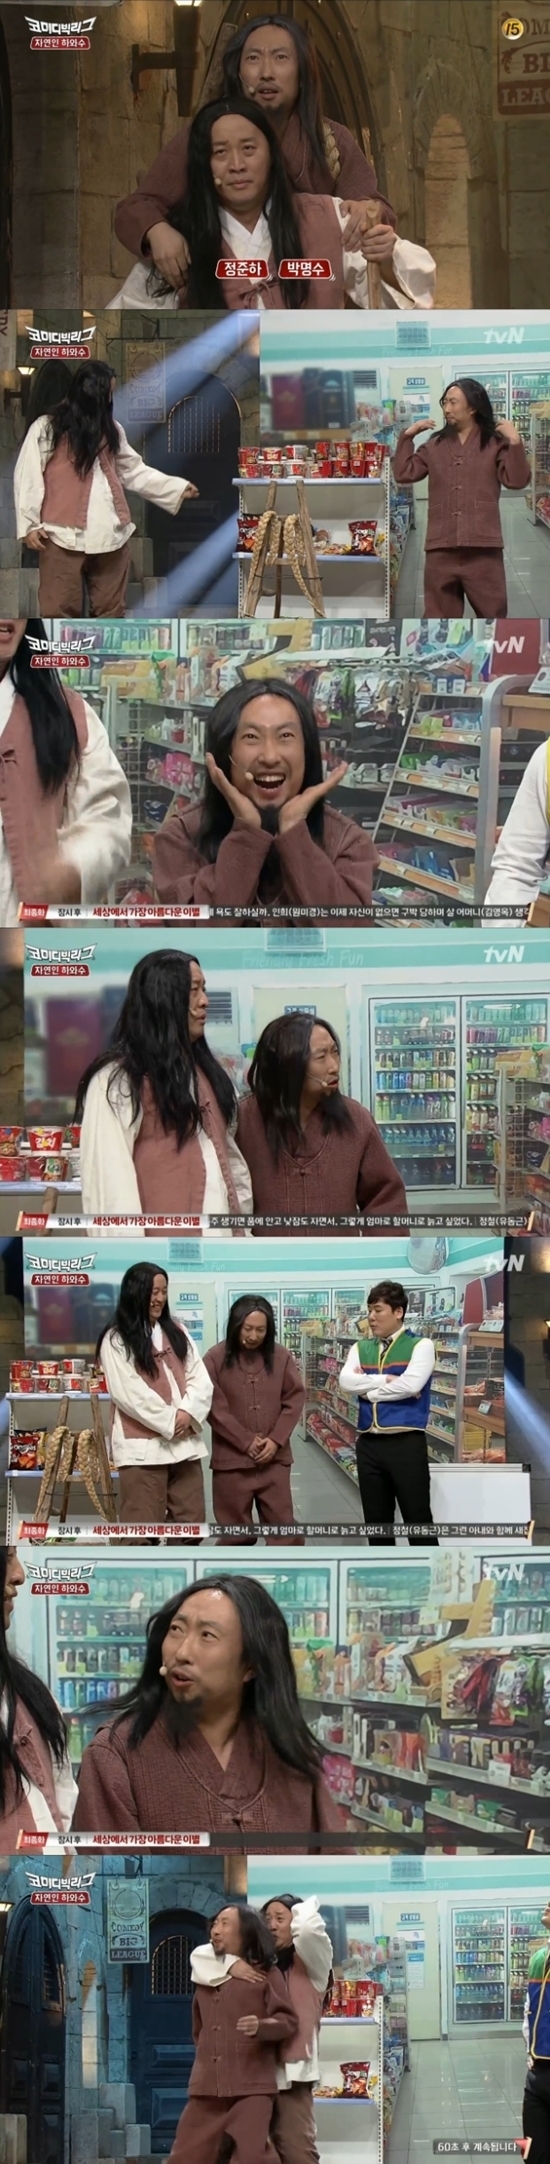 tvN '코미디빅리그' 방송 화면 캡처 © News1